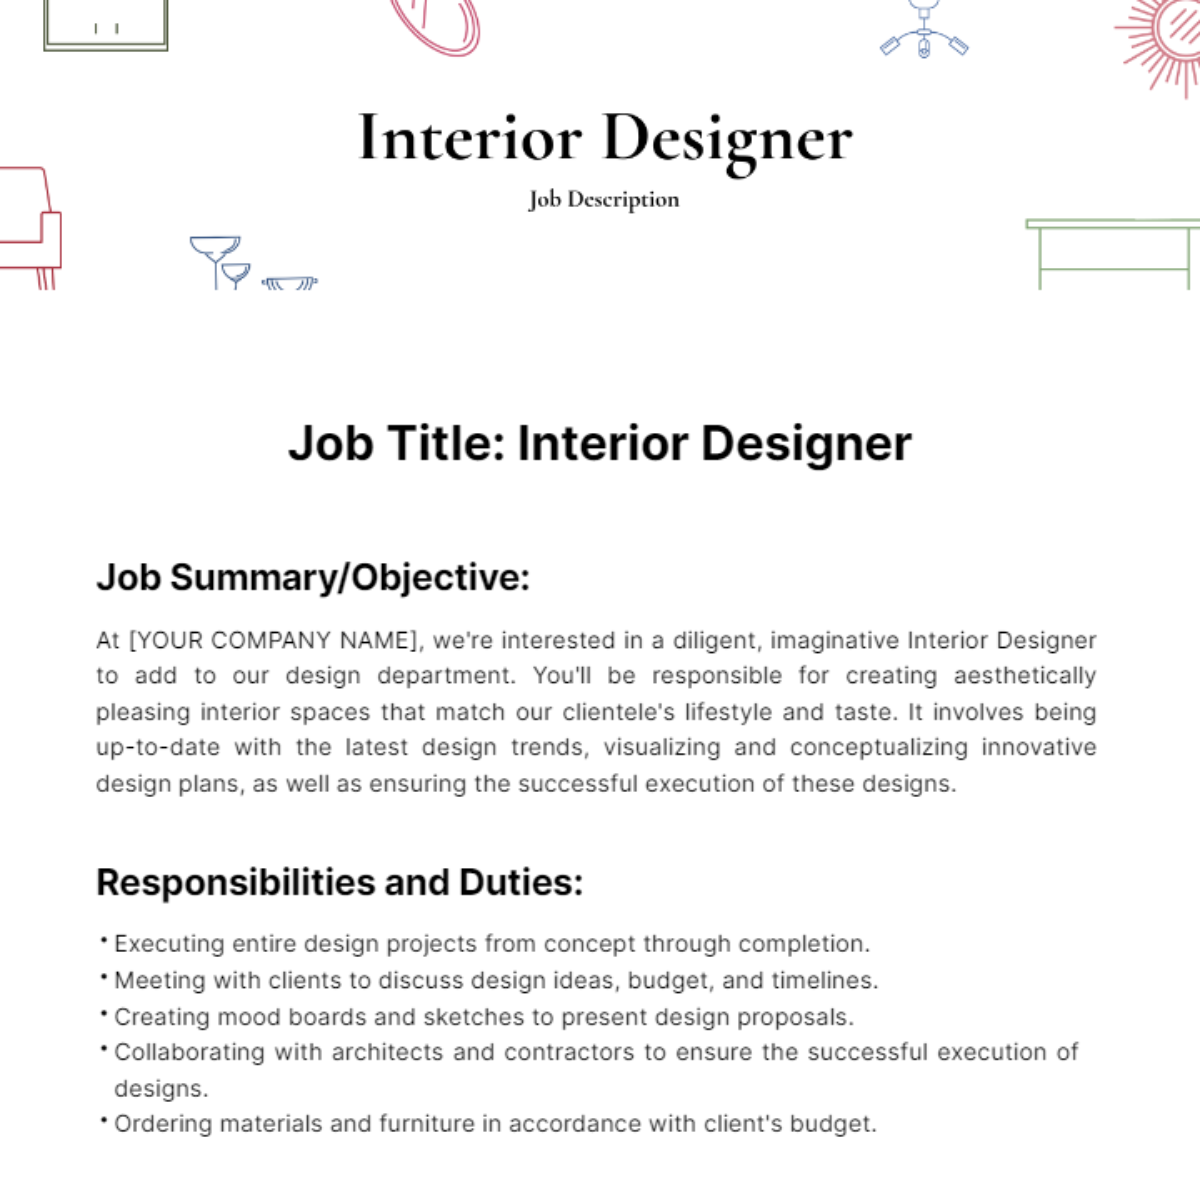 Interior Designer Job Description Template